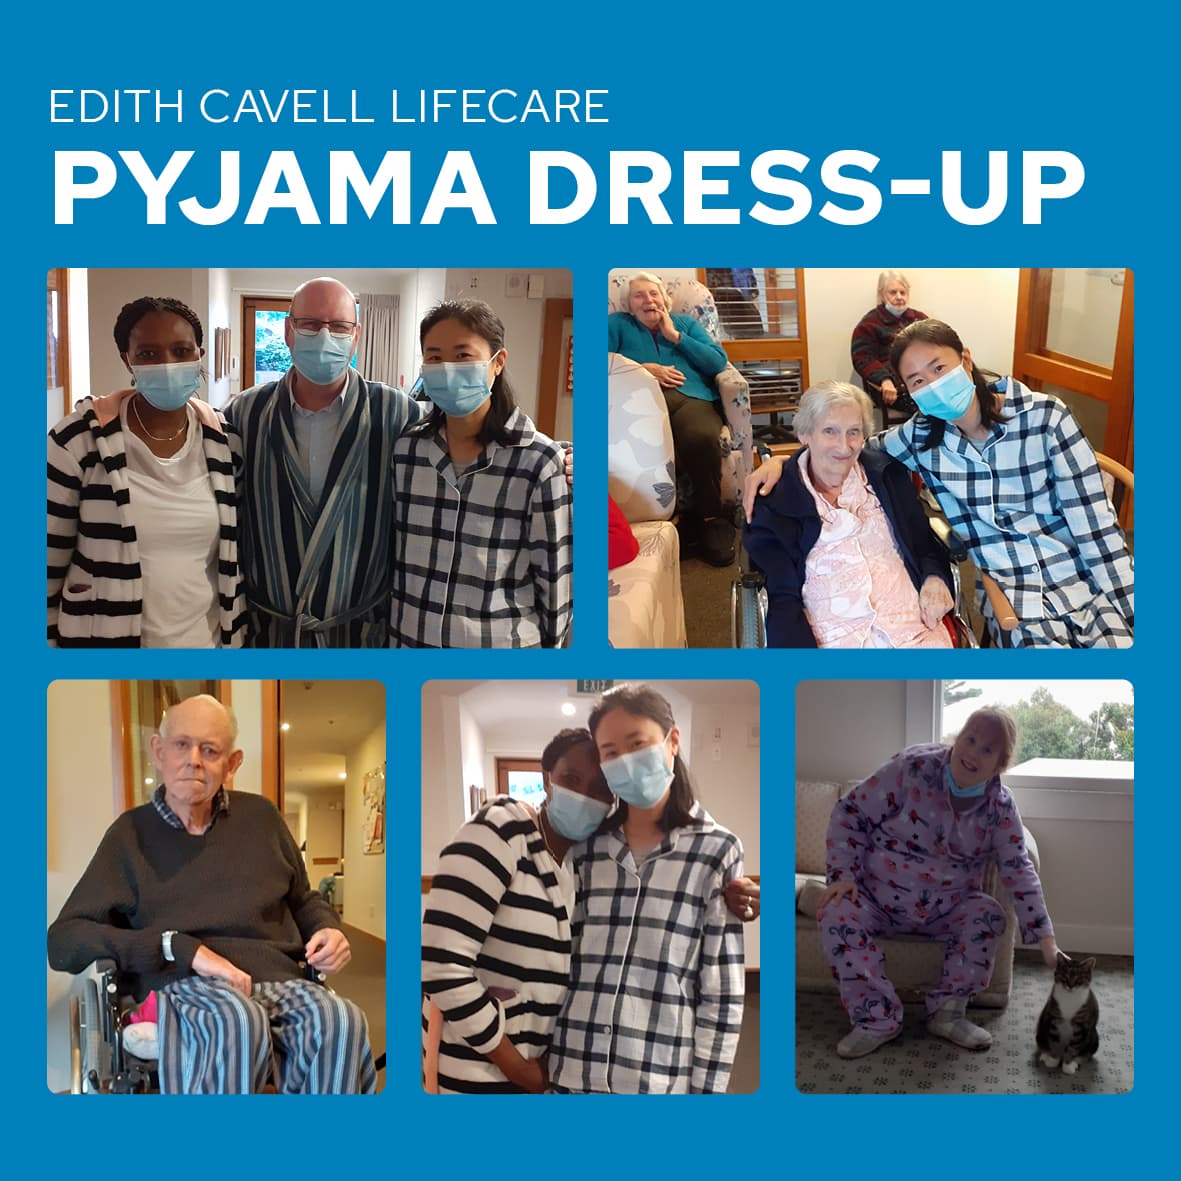 Pyjama dress-up day at Edith Cavell